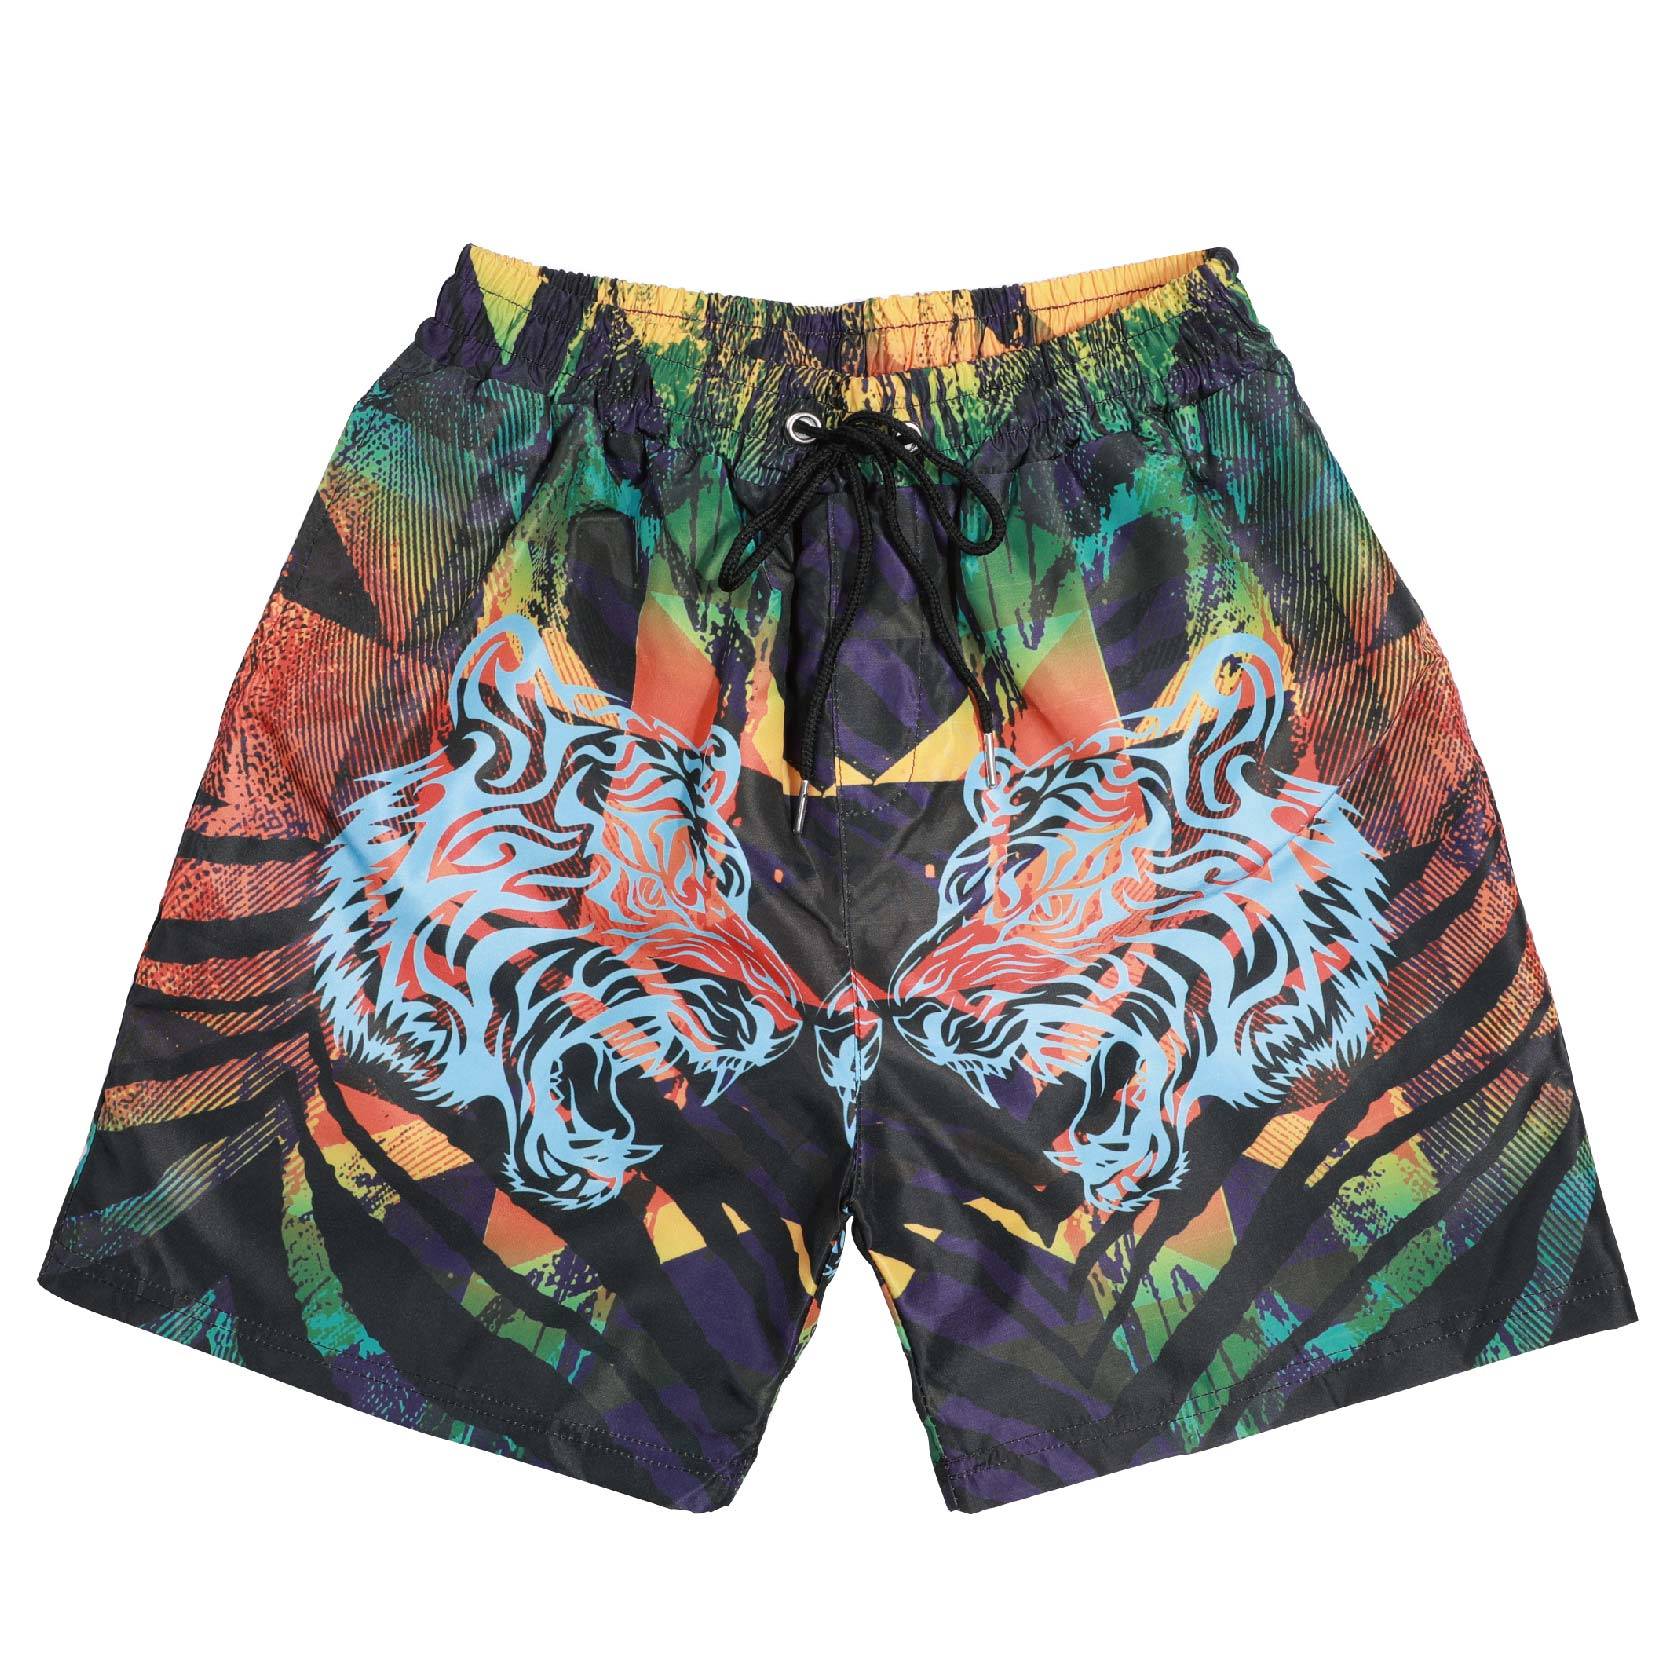 Special Price for Elastic Waist Shorts - Ngozi Beach Shorts Men Quick Dry Jaguar Printed Elastic Waist – Fullerton